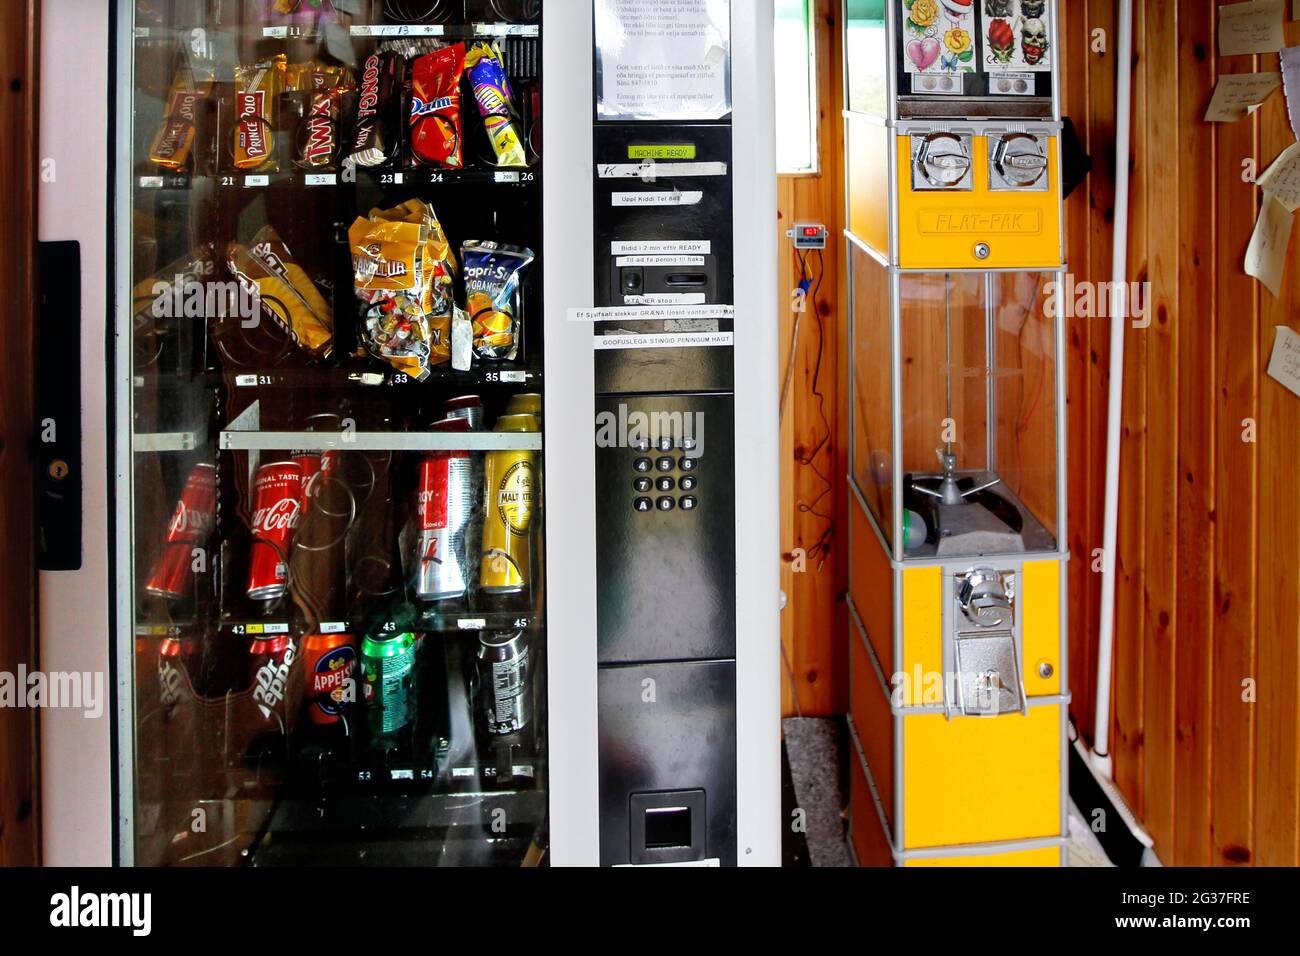 Coke-Sjalfsali, Coca-Cola-Getränkeautomat, Getränke- und Süßwarenautomat,  Borgarfjaroarvegur, Island Stockfotografie - Alamy